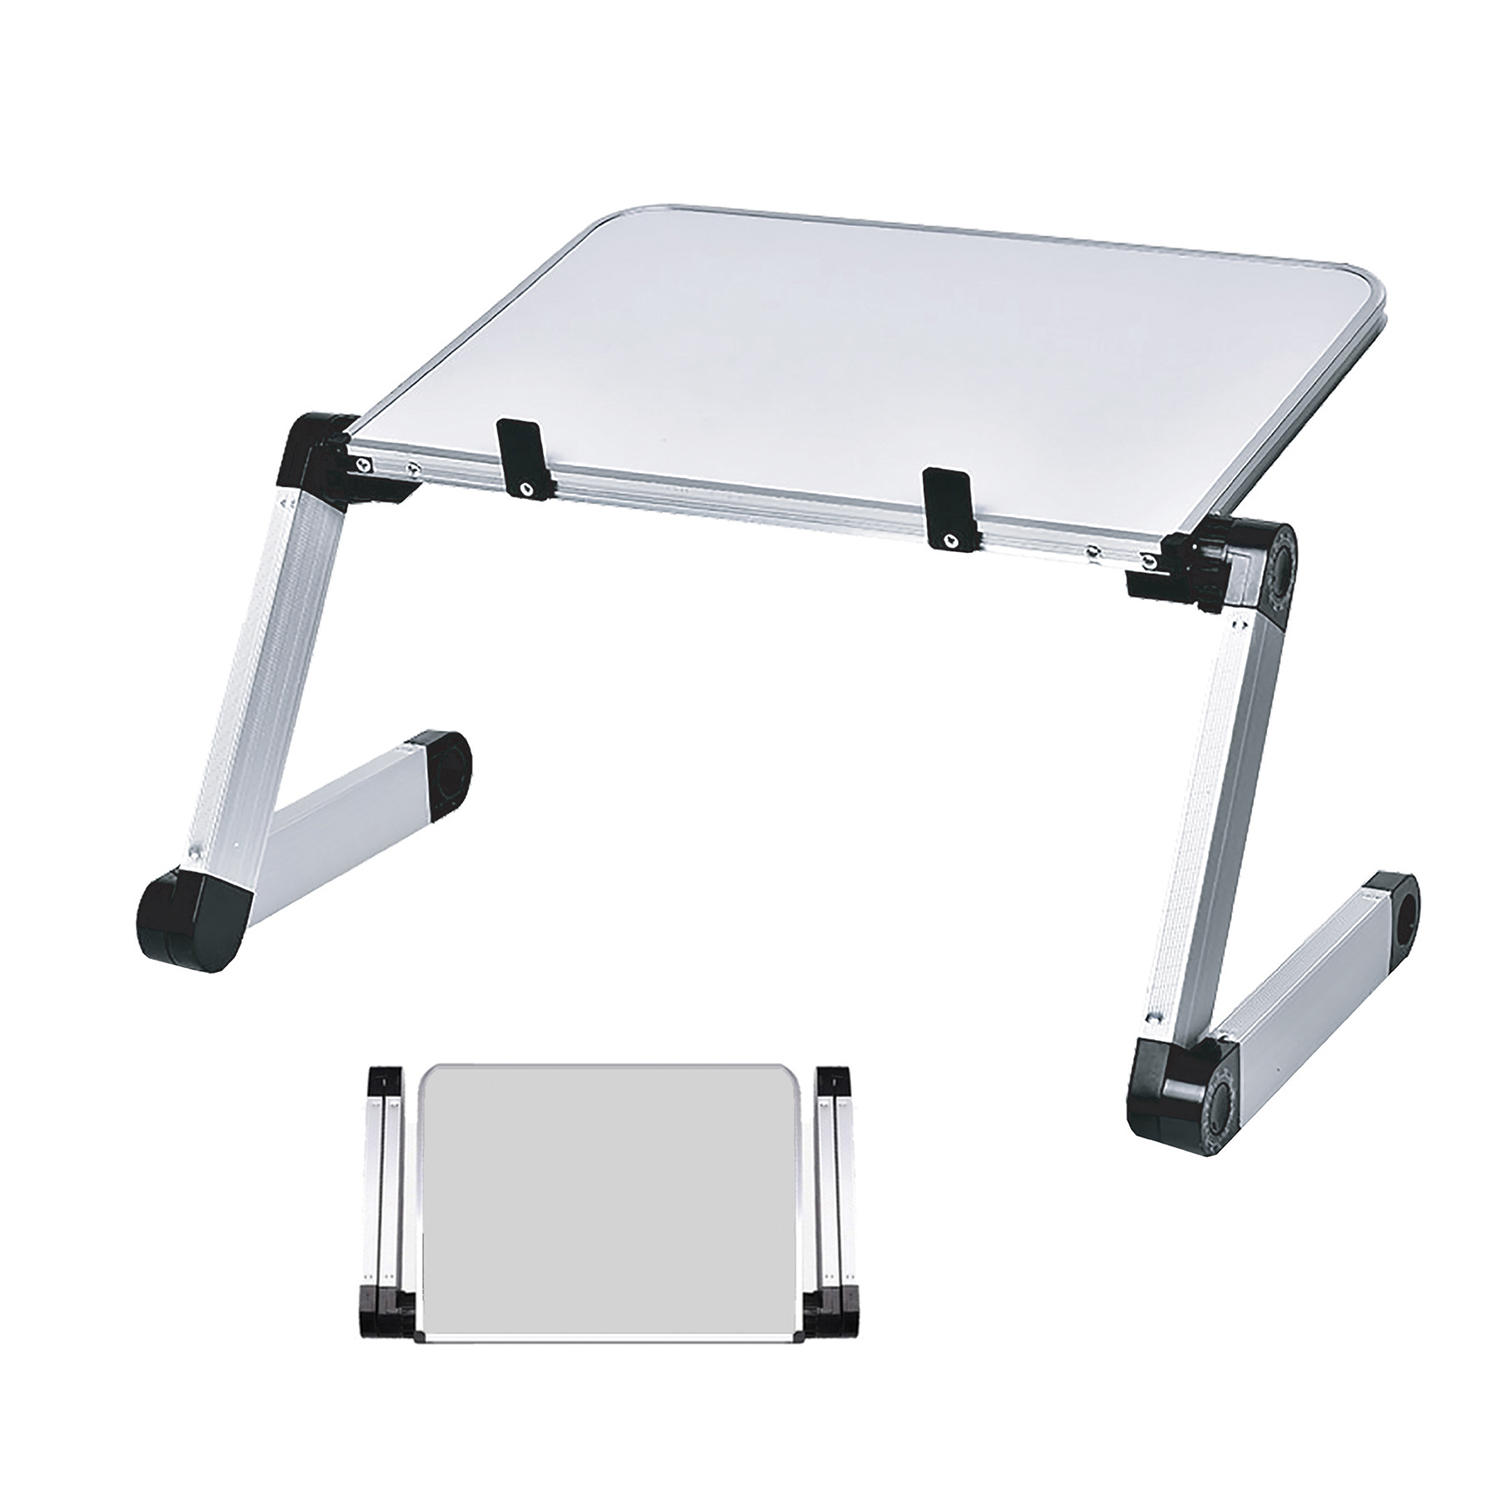 Bytech Multi-Angle Laptop Stand, silver, 1pc